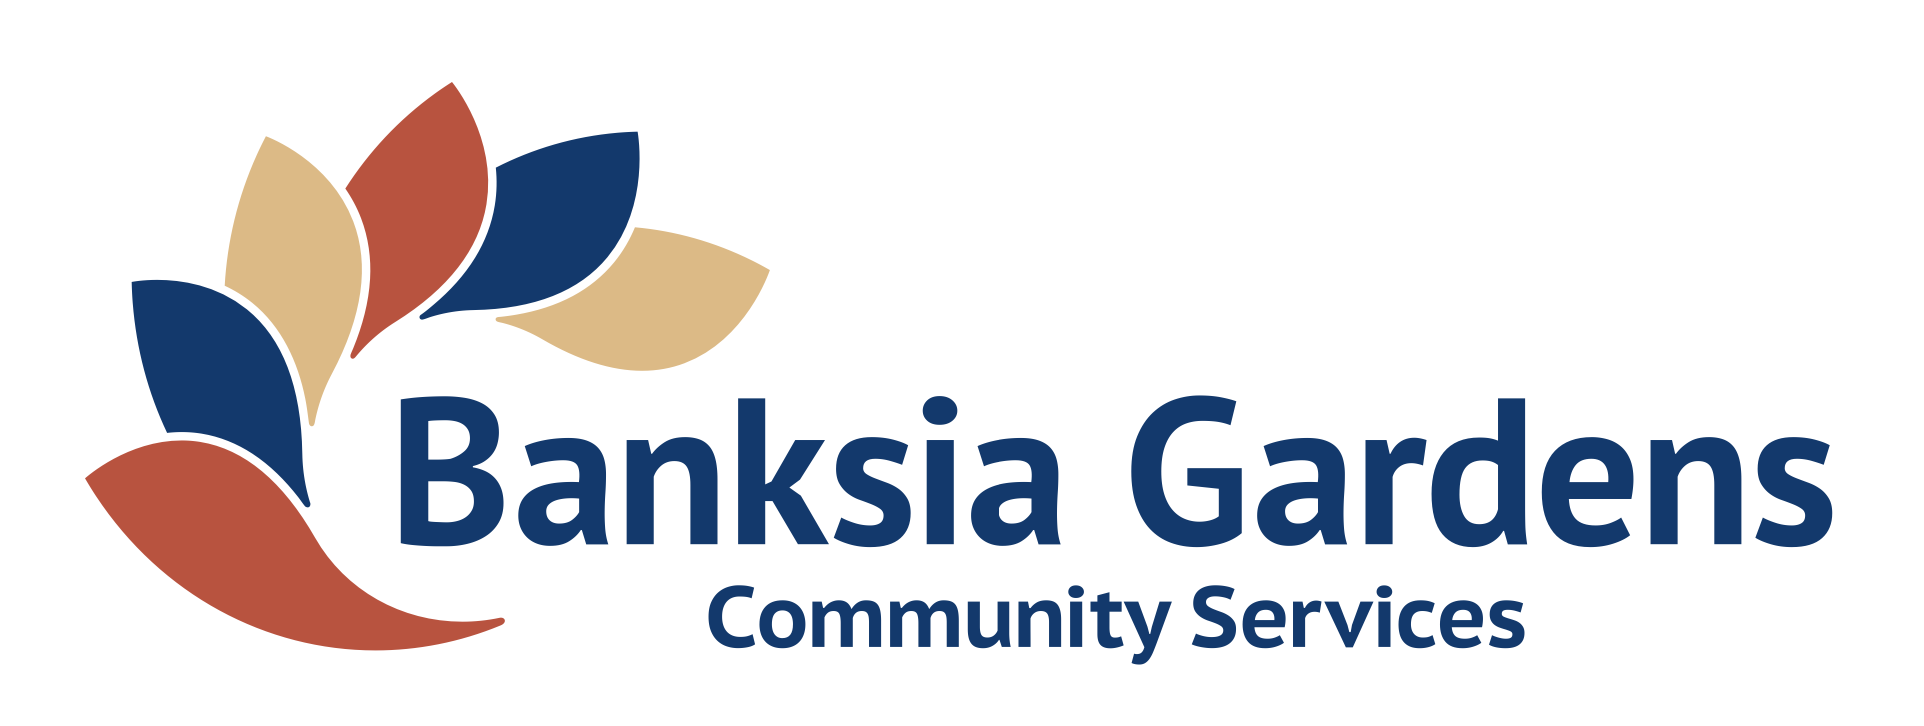 Banksia Gardens Community Services